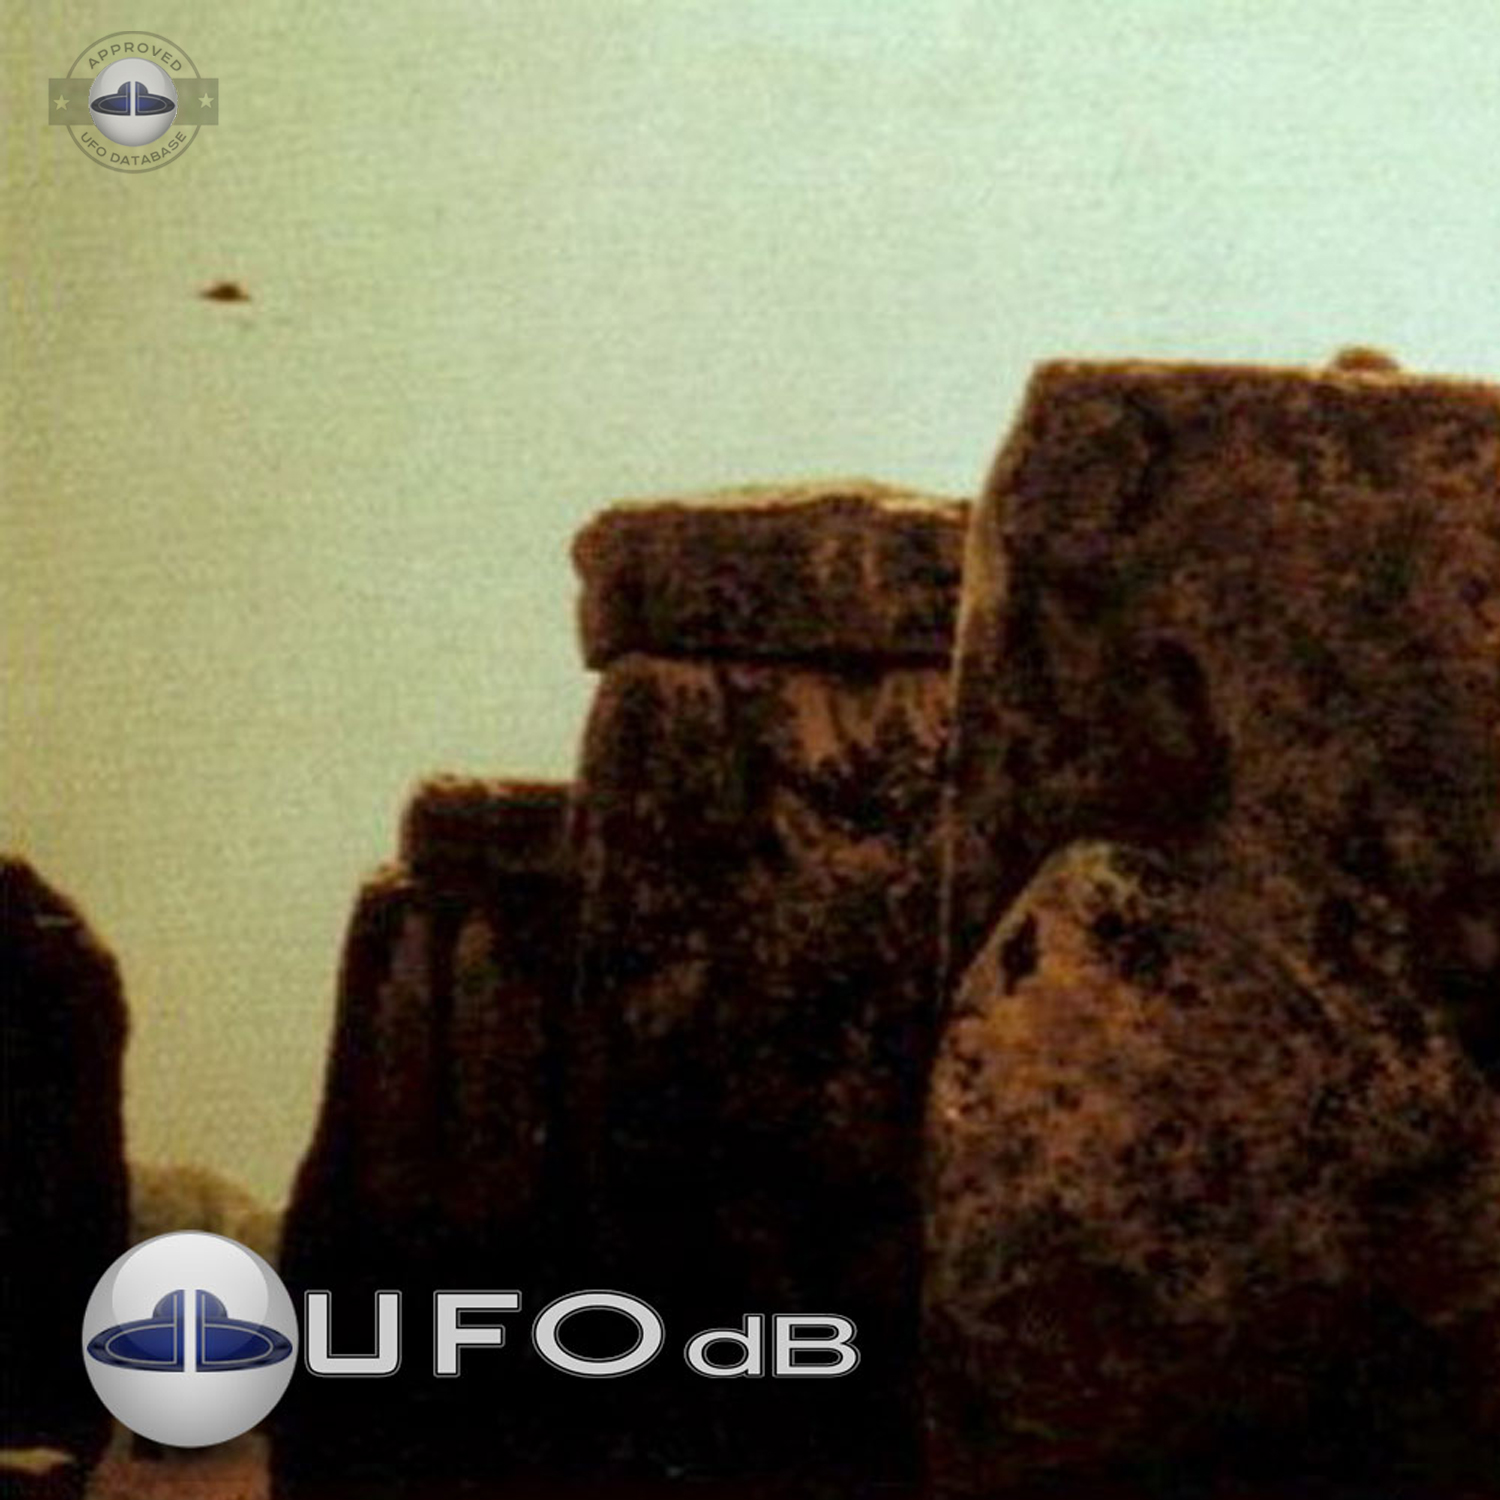 UFO Picture taken near the famous Stonehenge prehistoric monument UFO Picture #49-2